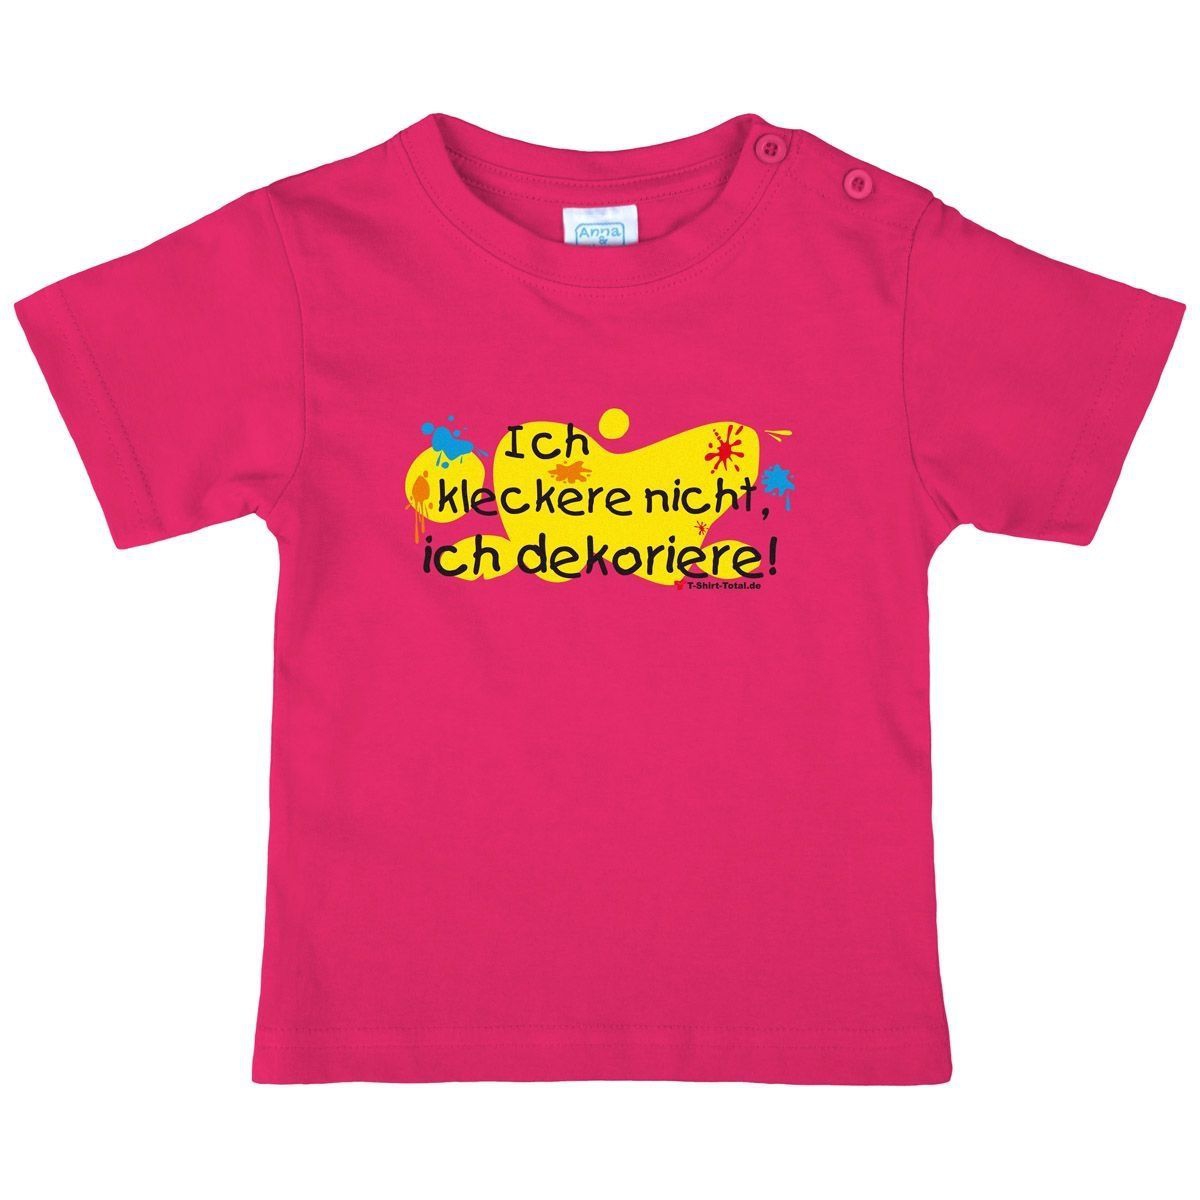 Kleckere nicht Kinder T-Shirt pink 80 / 86